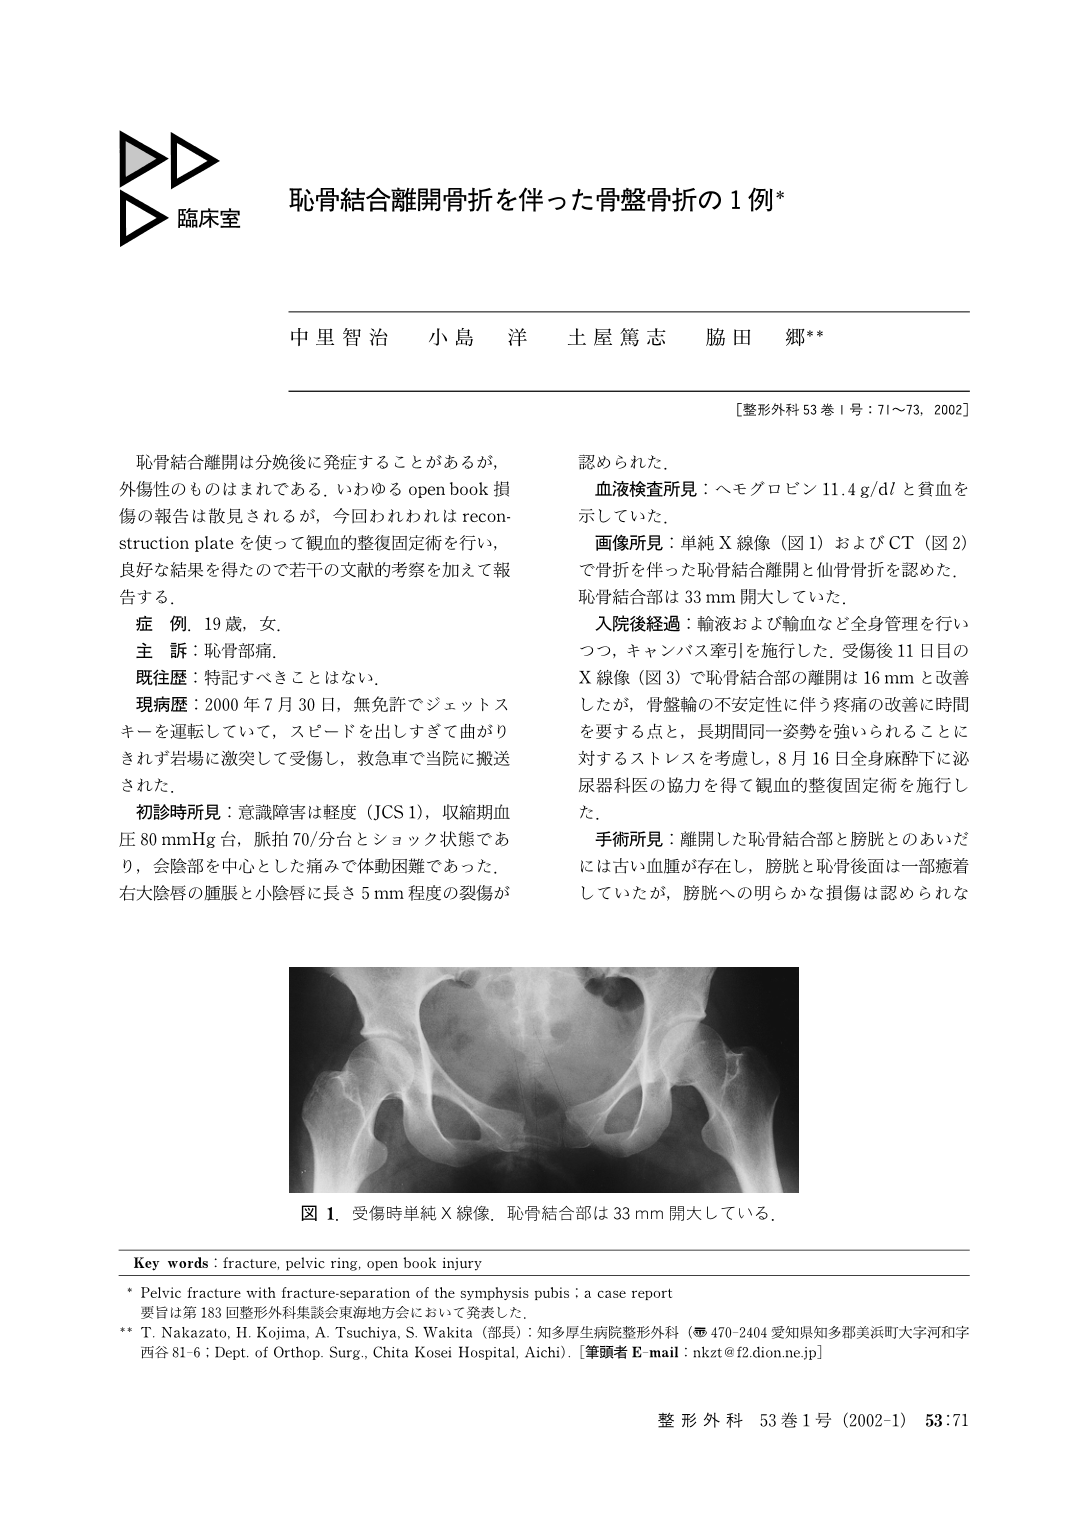 恥骨結合離開骨折を伴った骨盤骨折の1例 臨床雑誌整形外科 53巻1号 医書 Jp